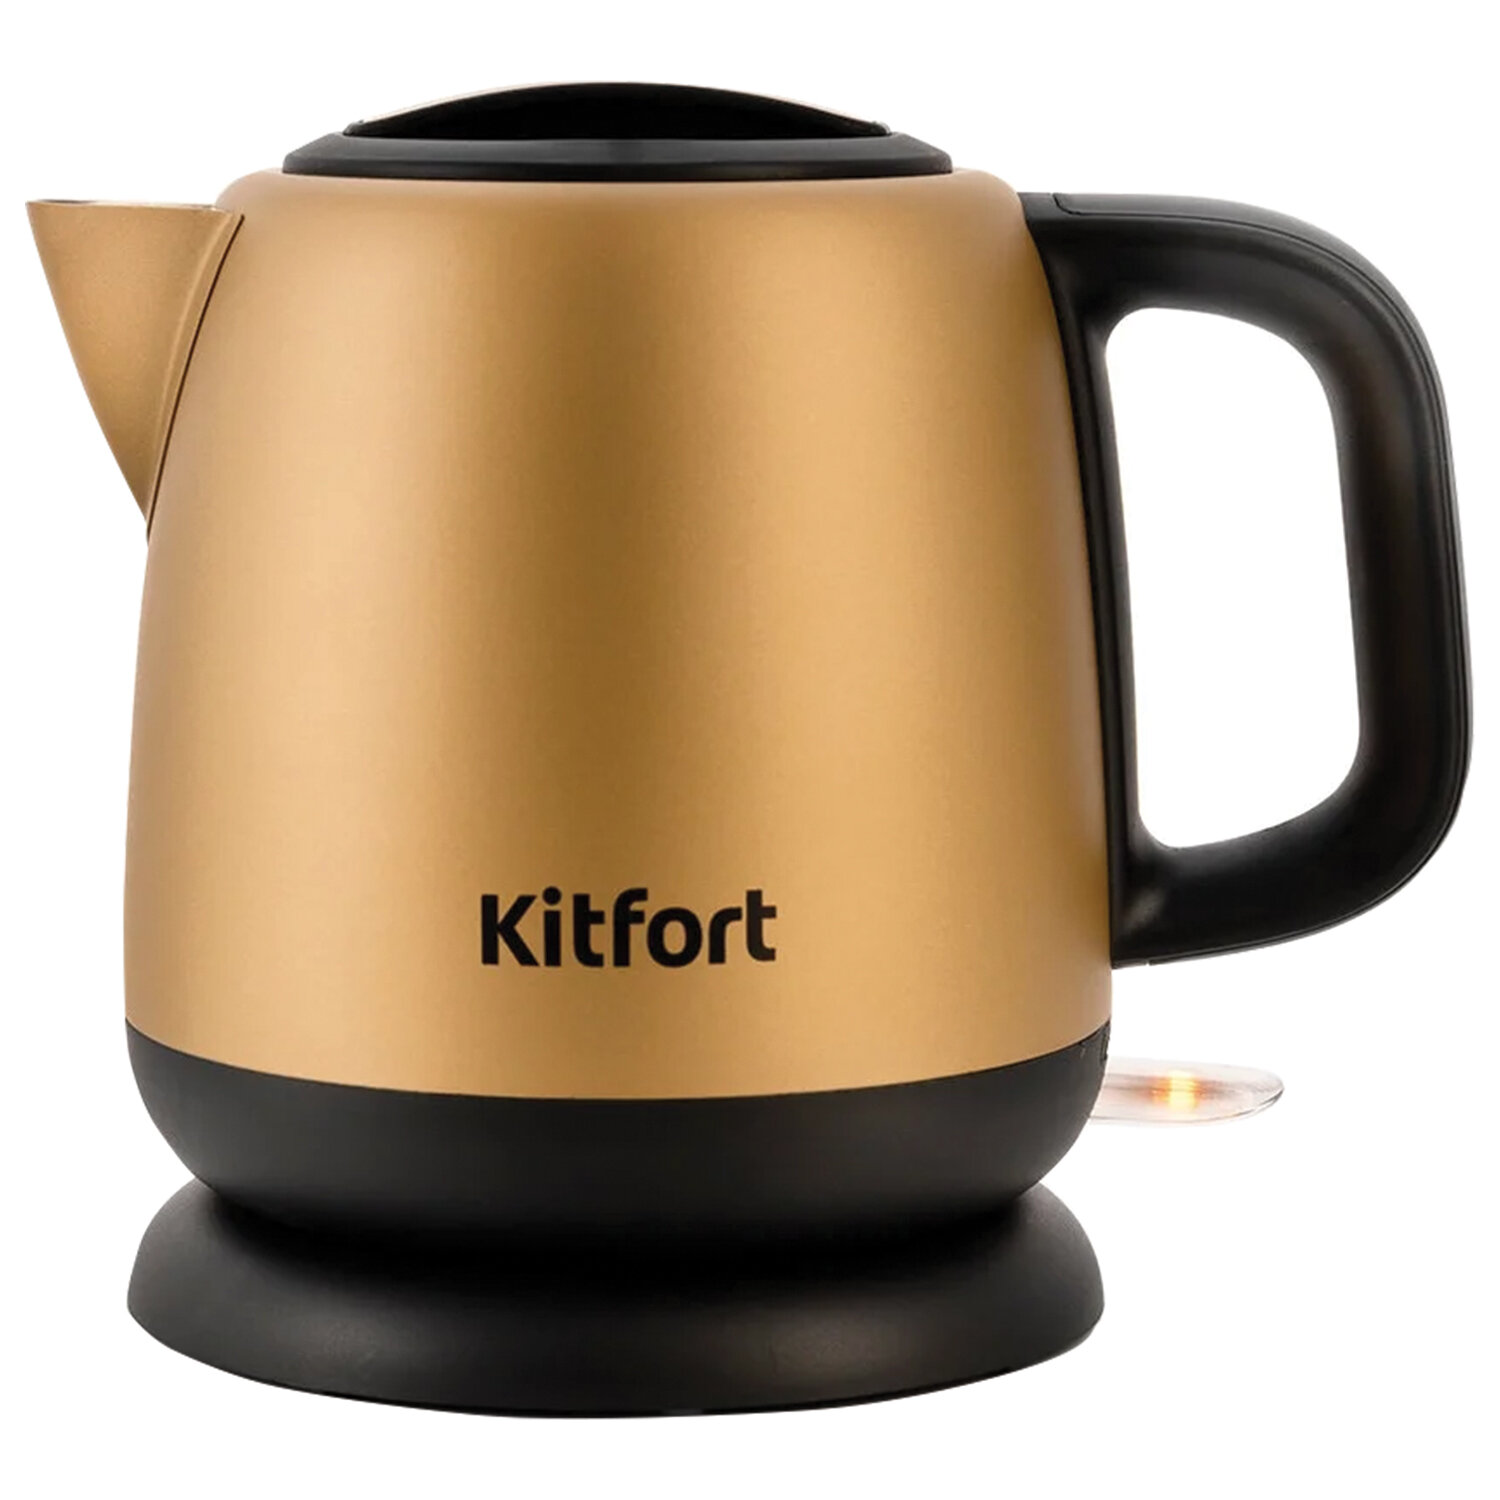  KITFORT -6111